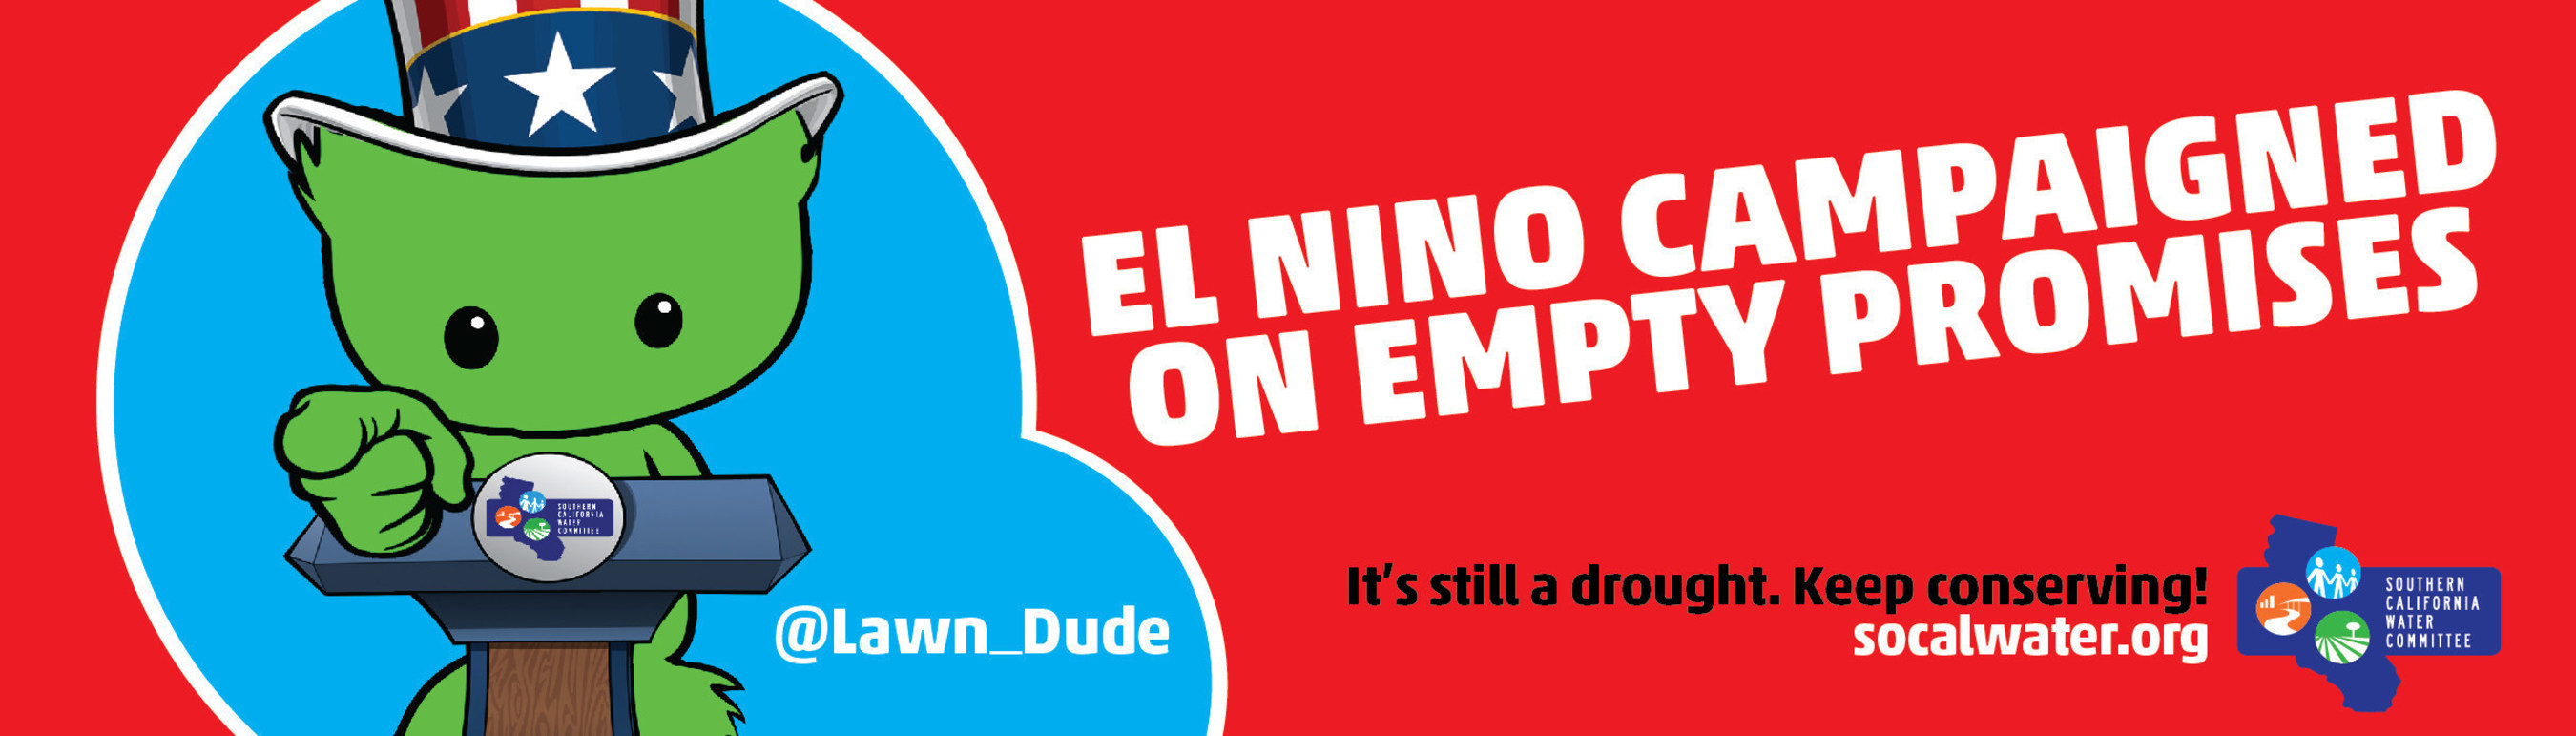 El Nino Campaigned On Empty Promises